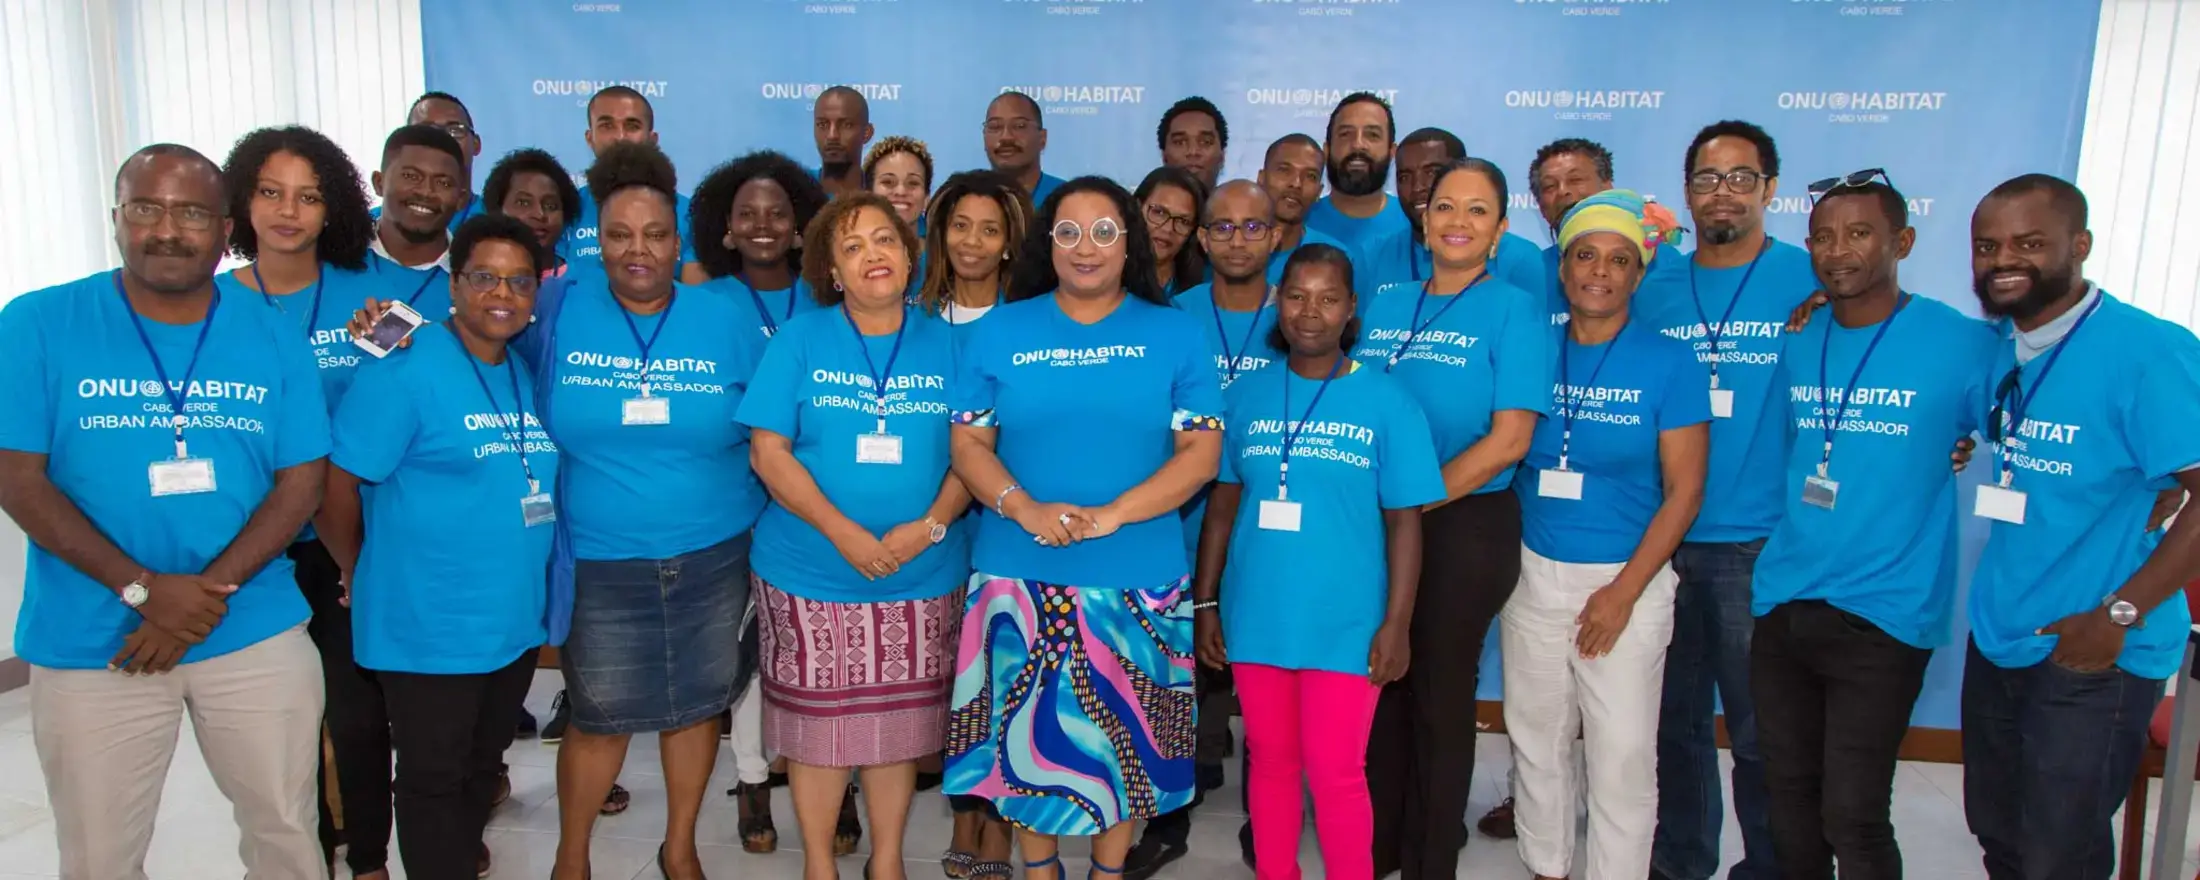 Nomination of Urban Ambassadors 2018, UN-Habitat Cabo Verde 